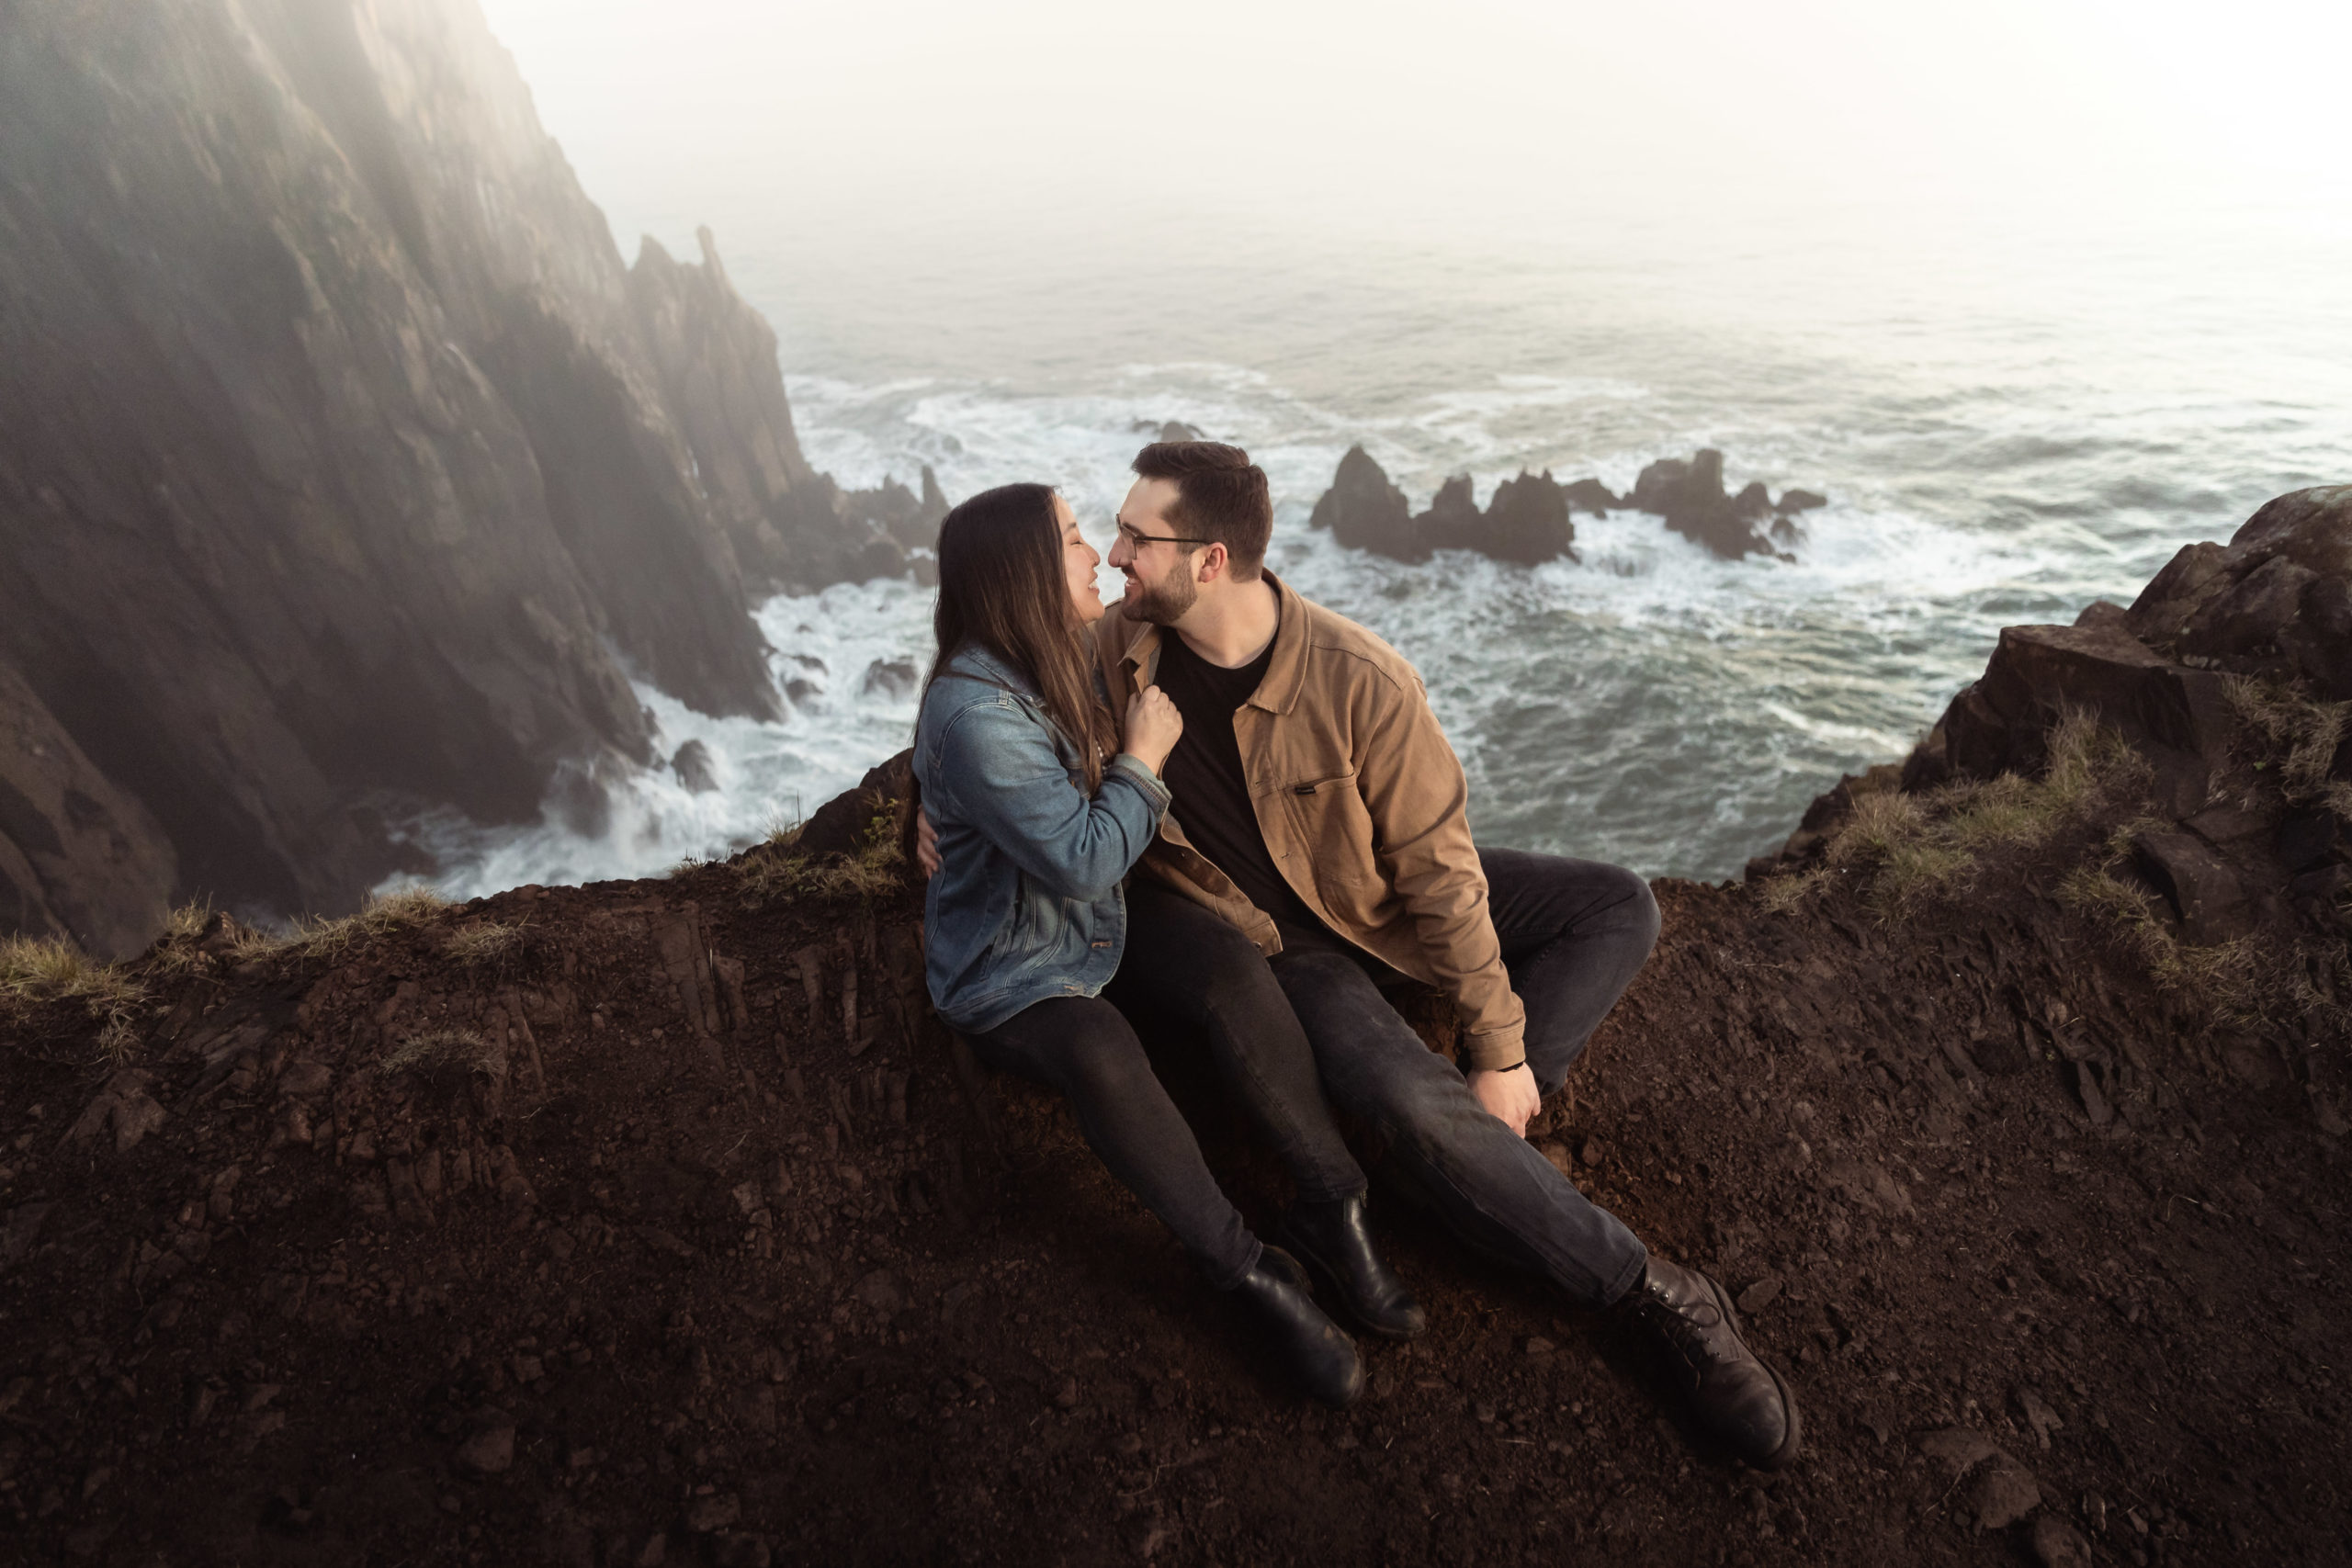 Engagement photography taken at Manzanita Cliffs on the Oregon Coast during sunset